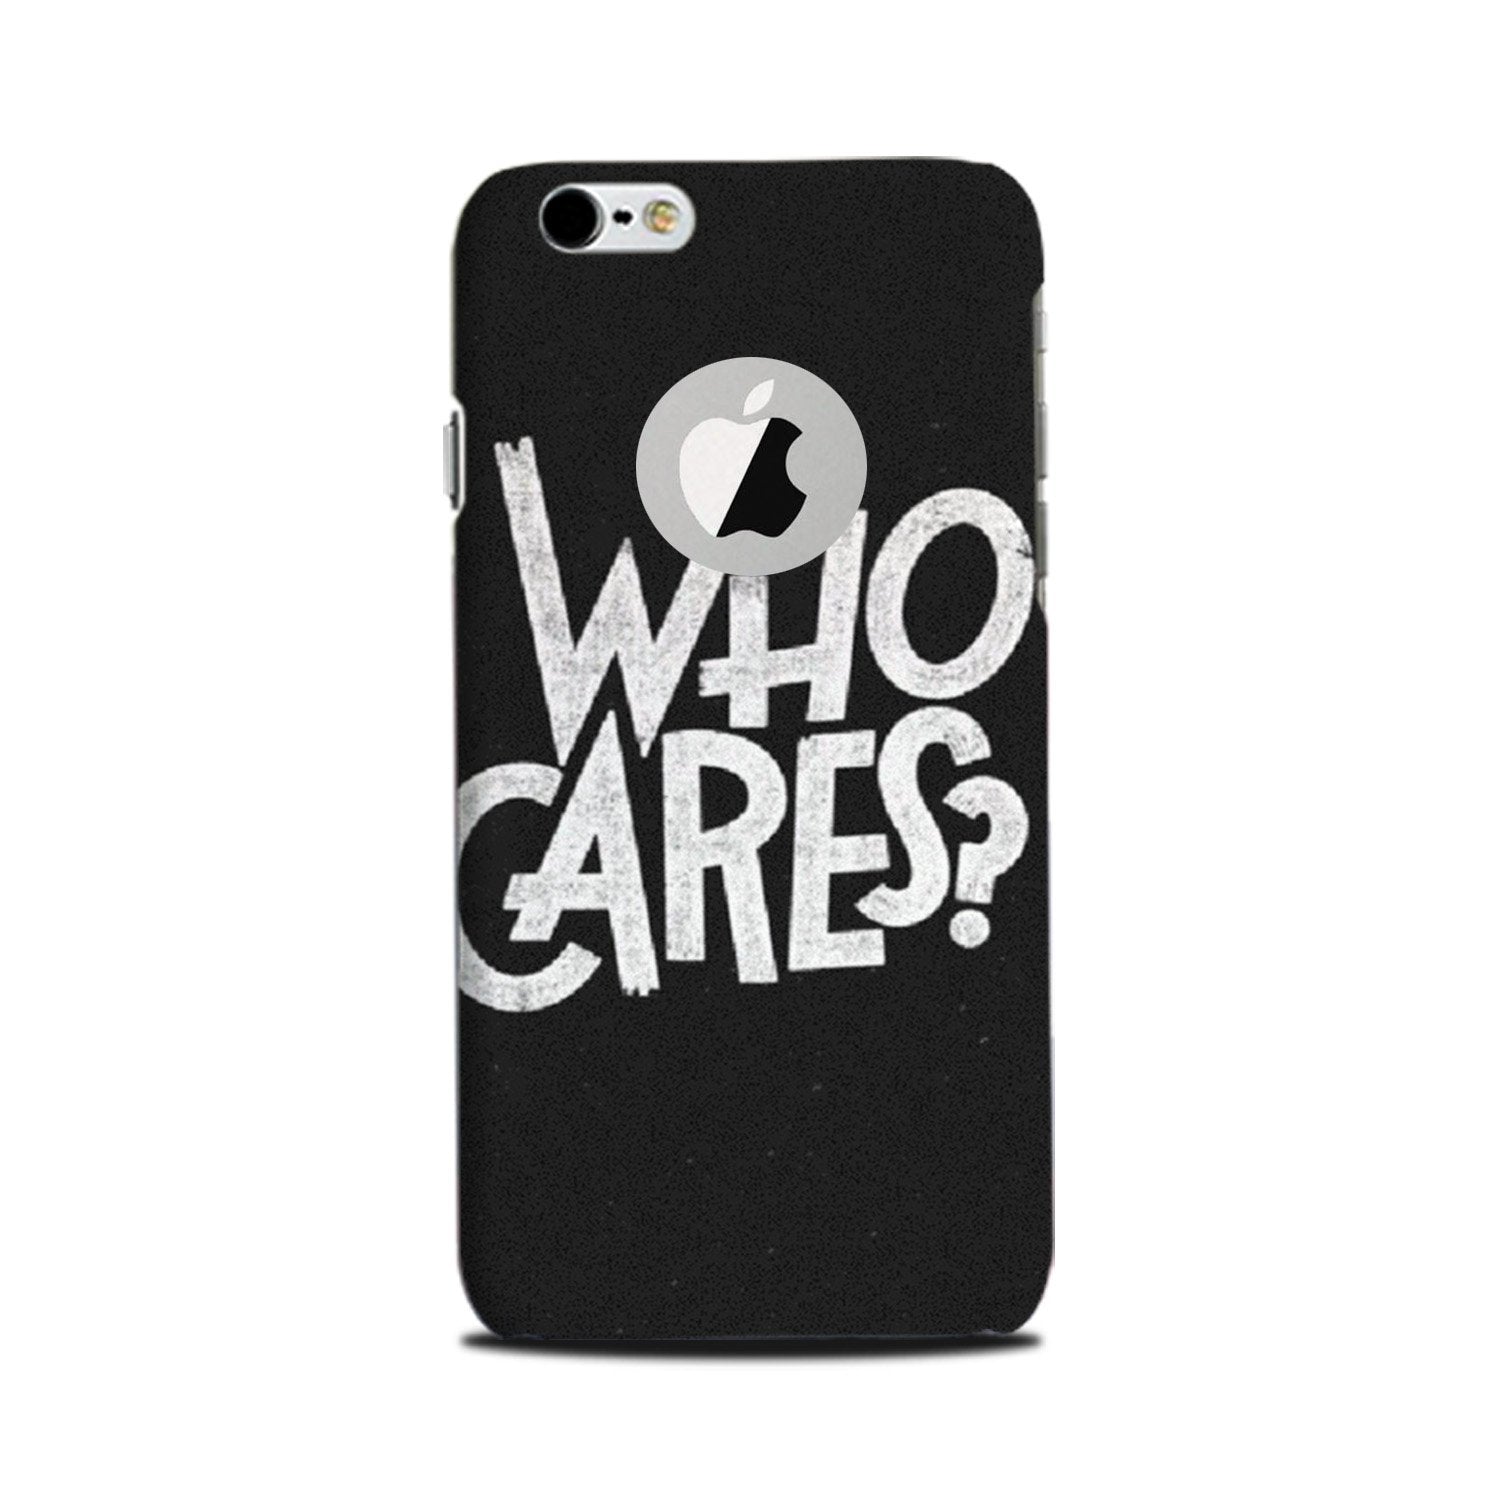 Who Cares Case for iPhone 6 Plus / 6s Plus logo cut 